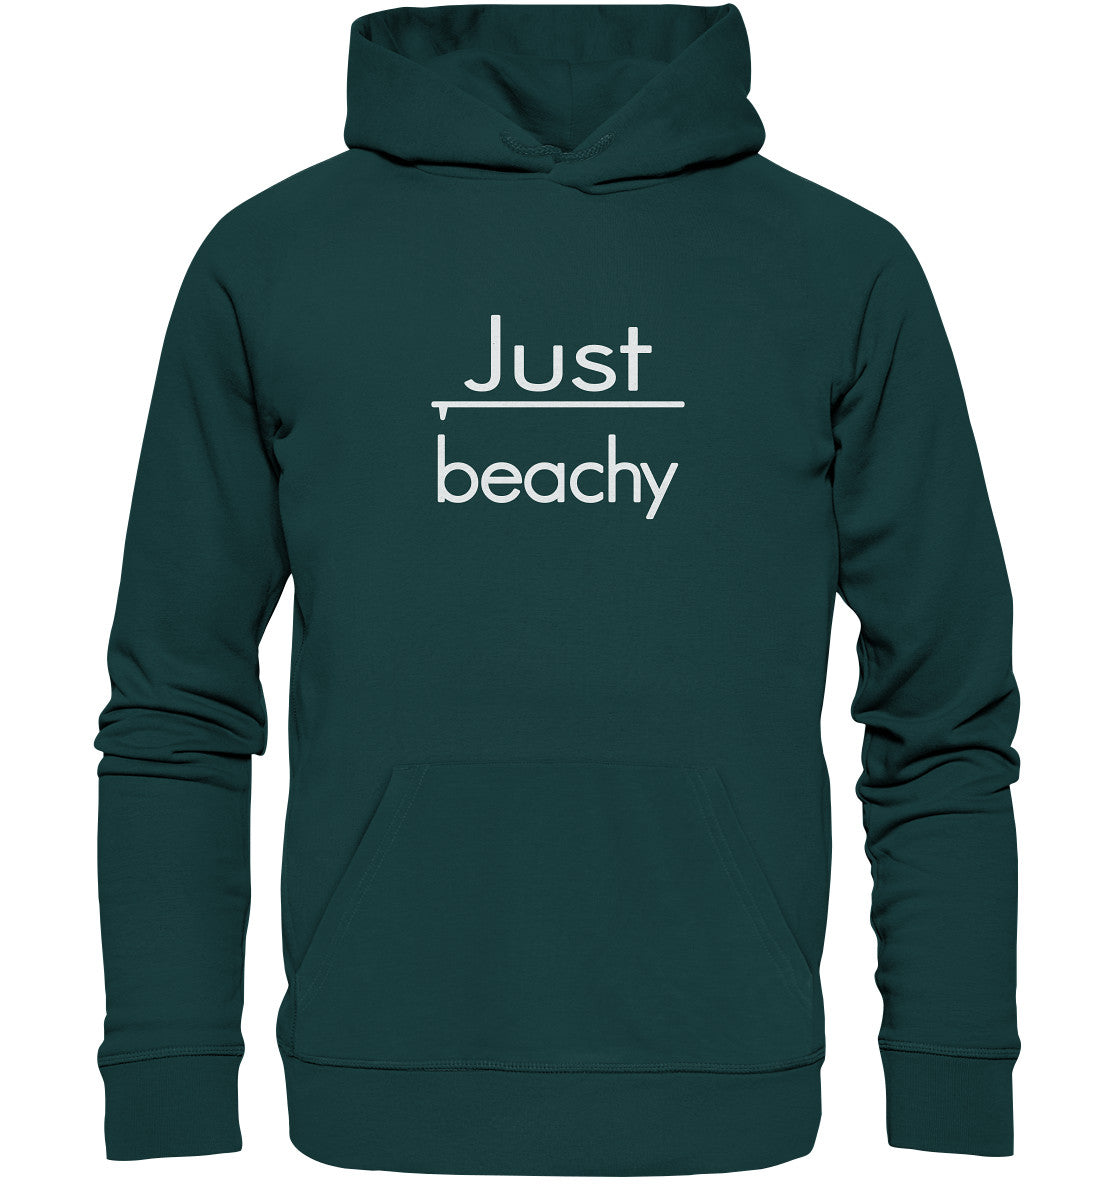 Boardtime-Just beachy - Organic Hoodie